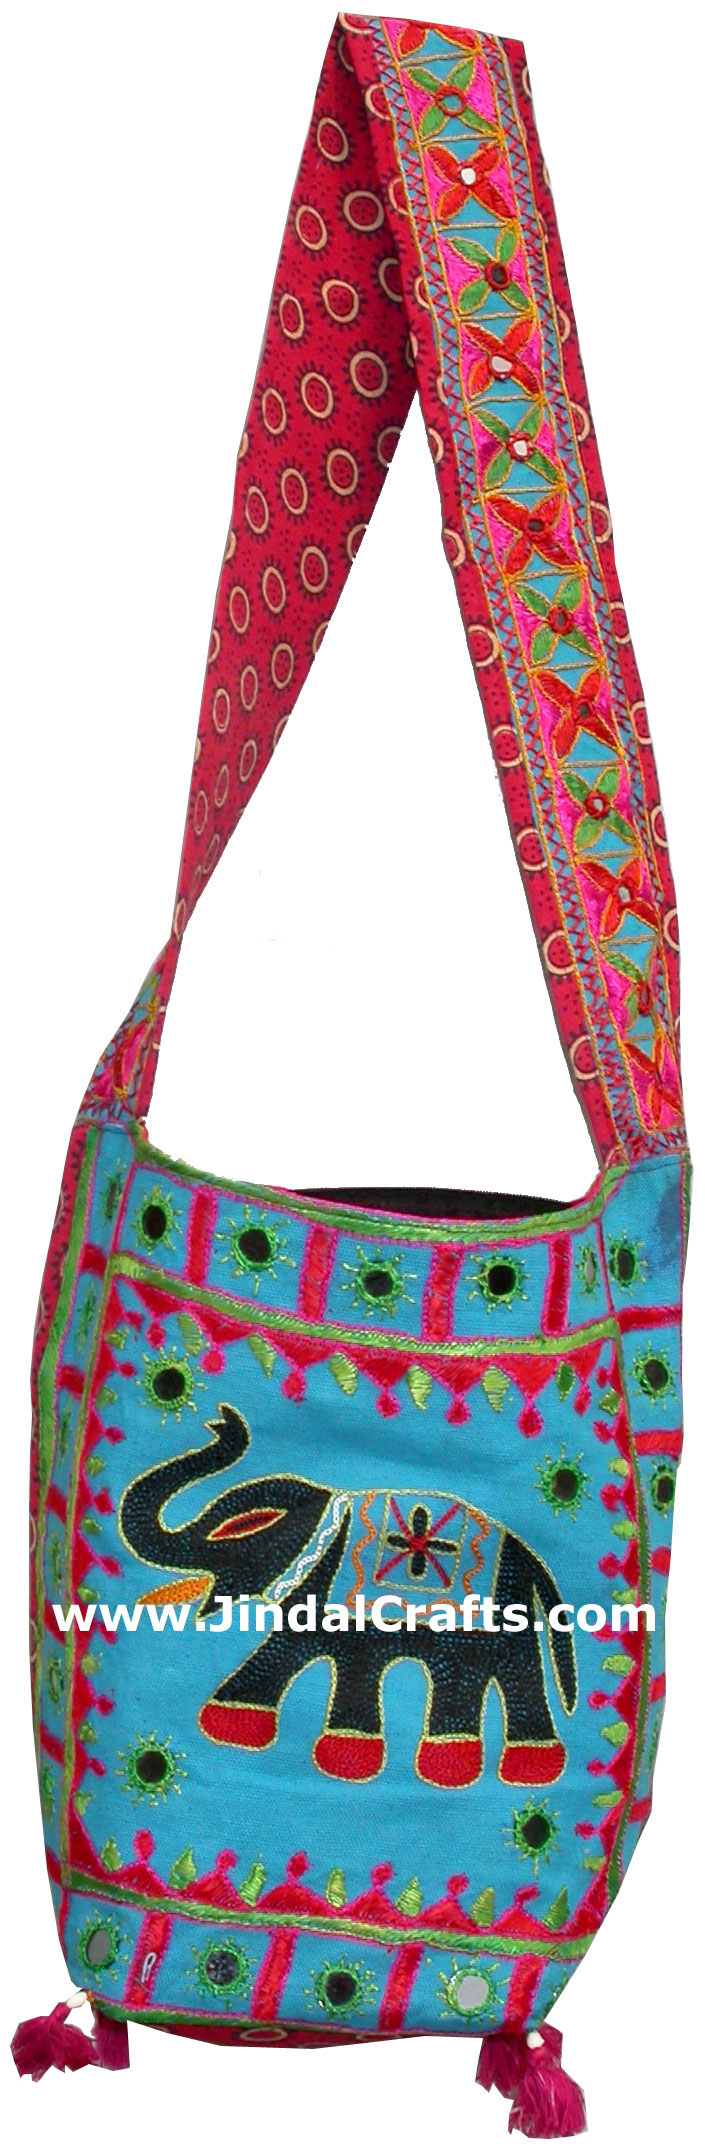 Colorful Hand Embroider Handbag Indian Traditional Art